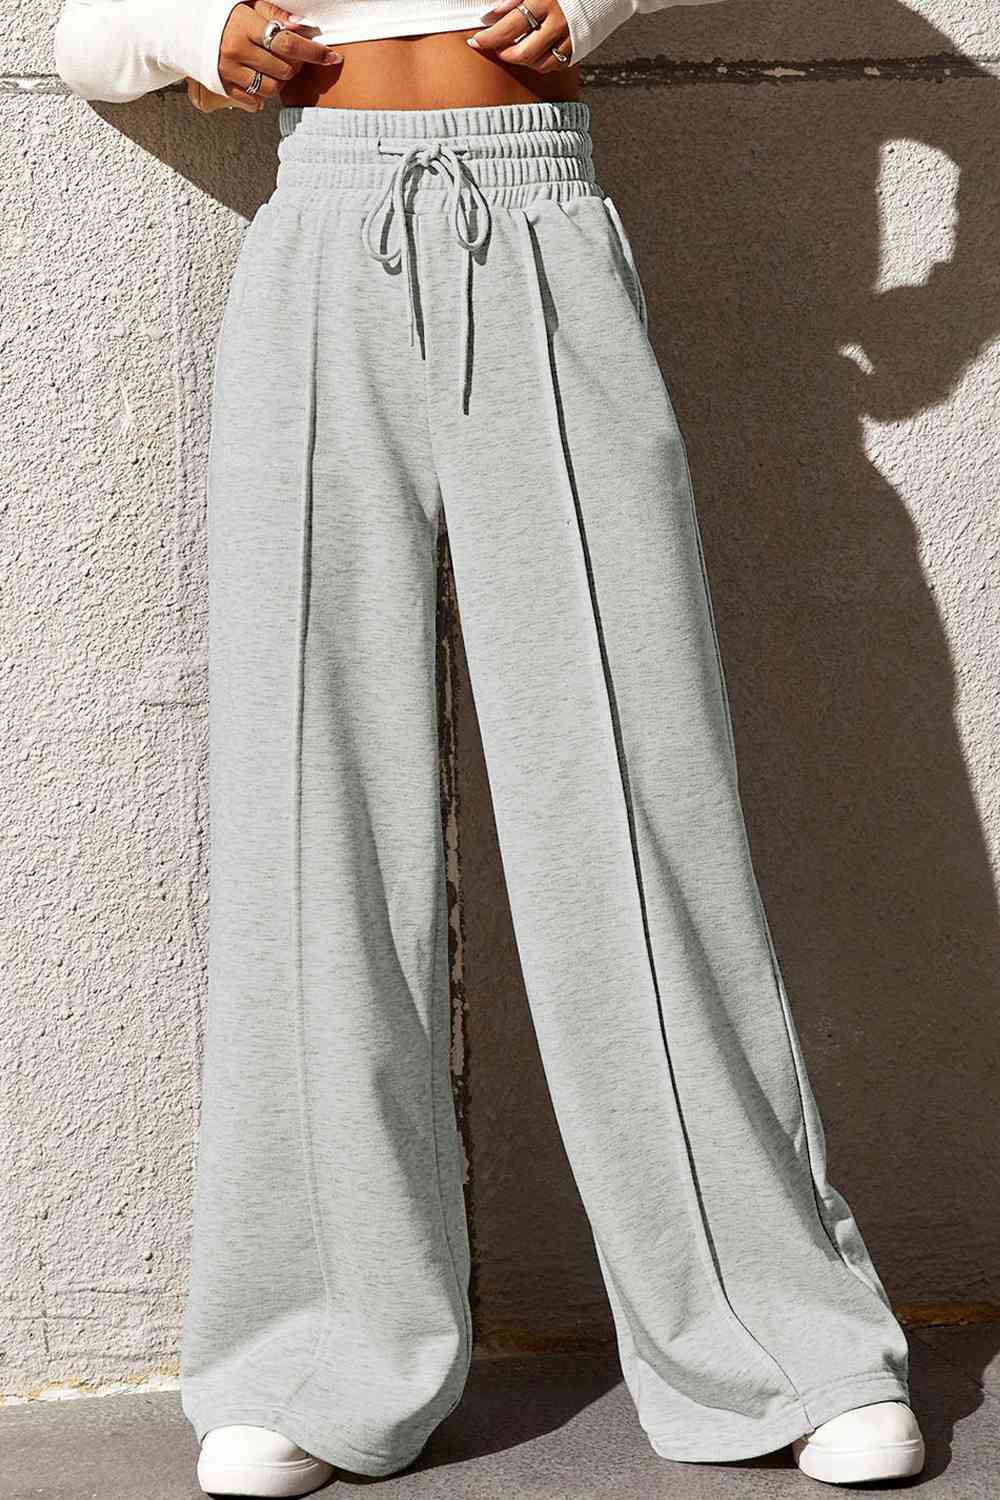 Gray Drawstring Wide Leg Pants with Pockets